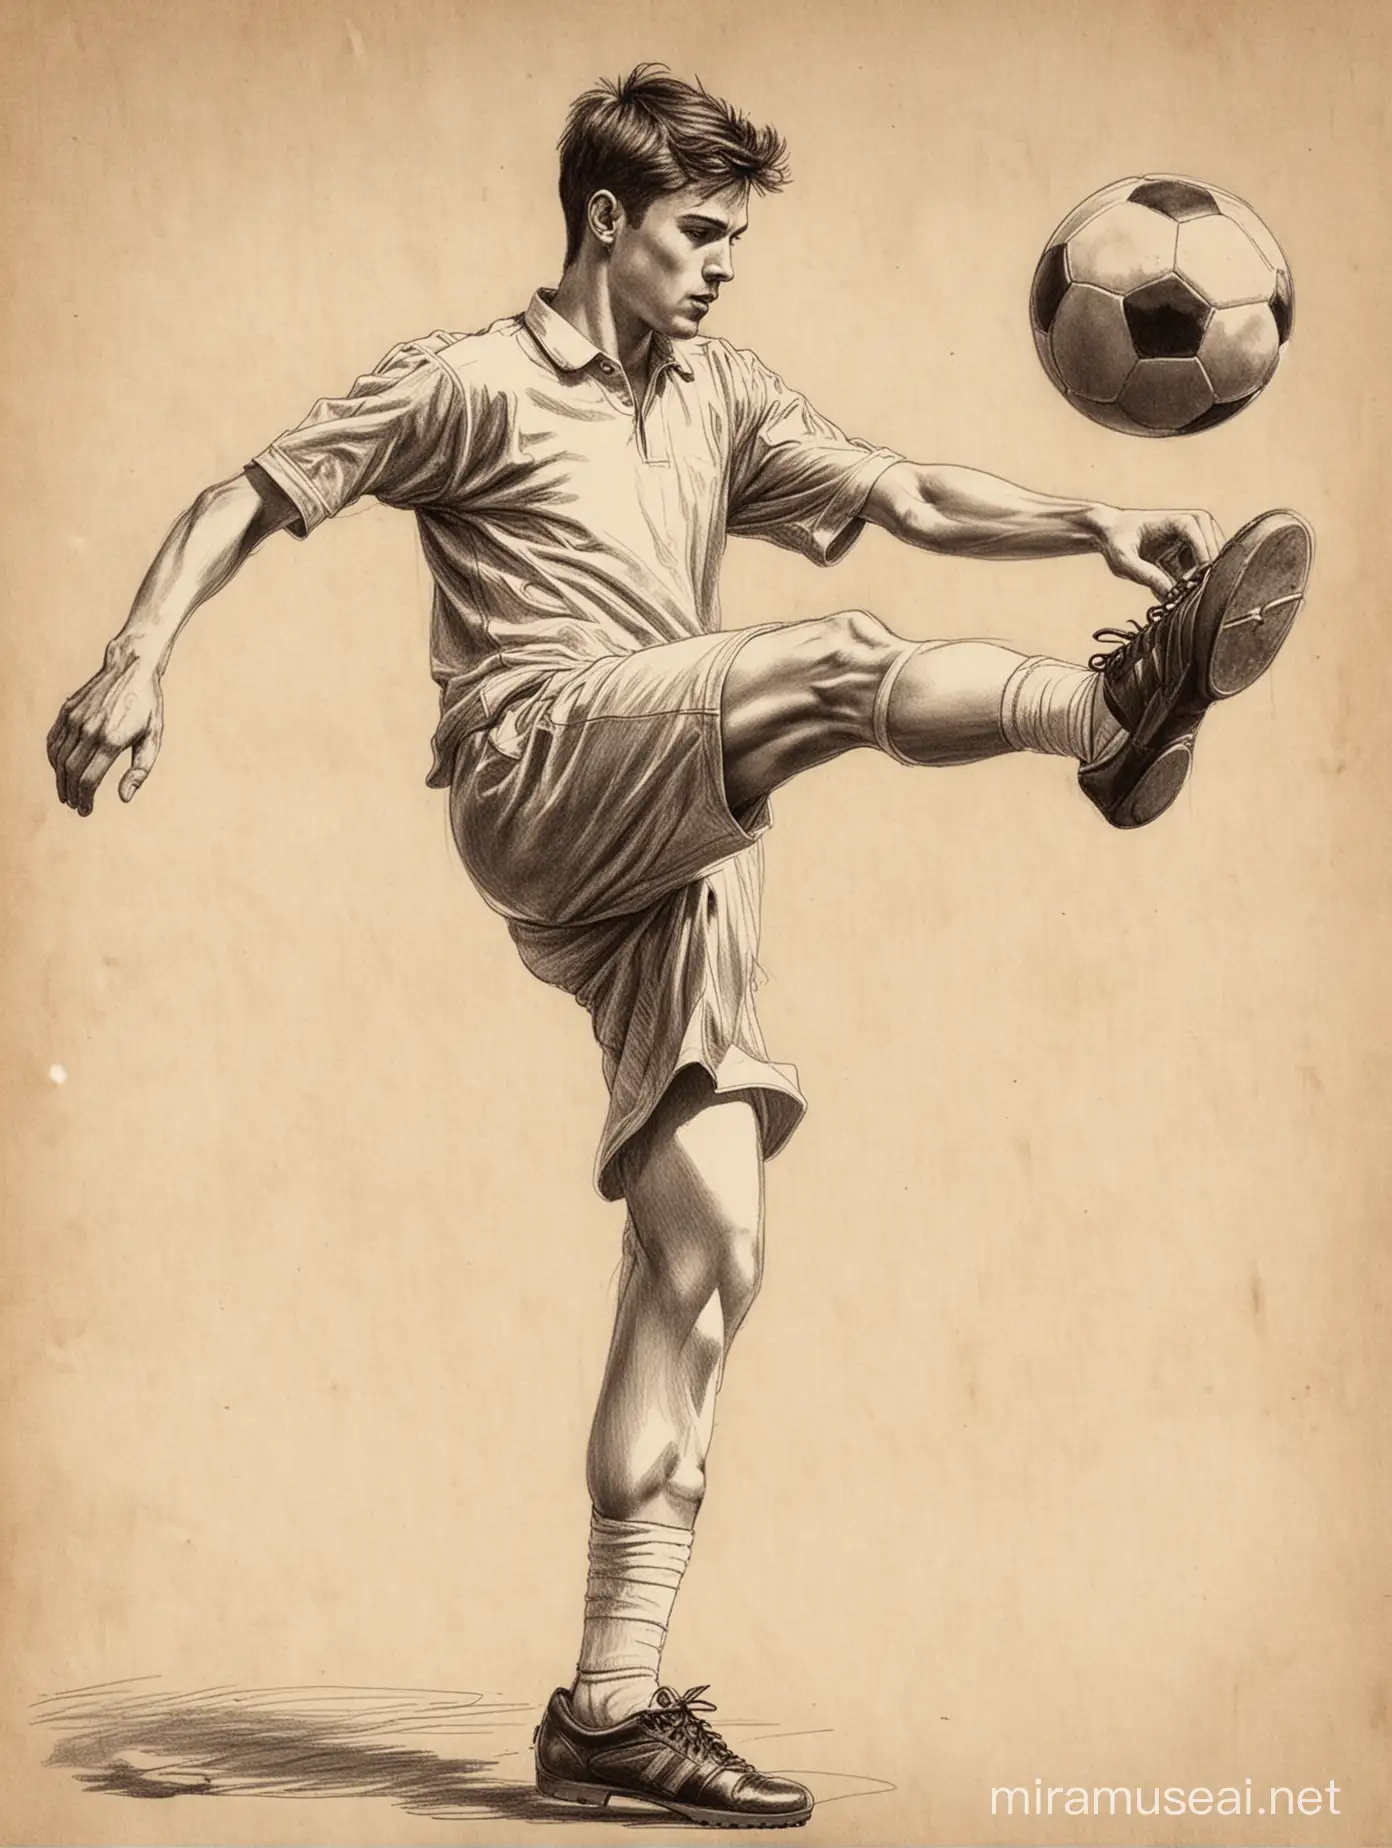 a  young man kicking football, sketch